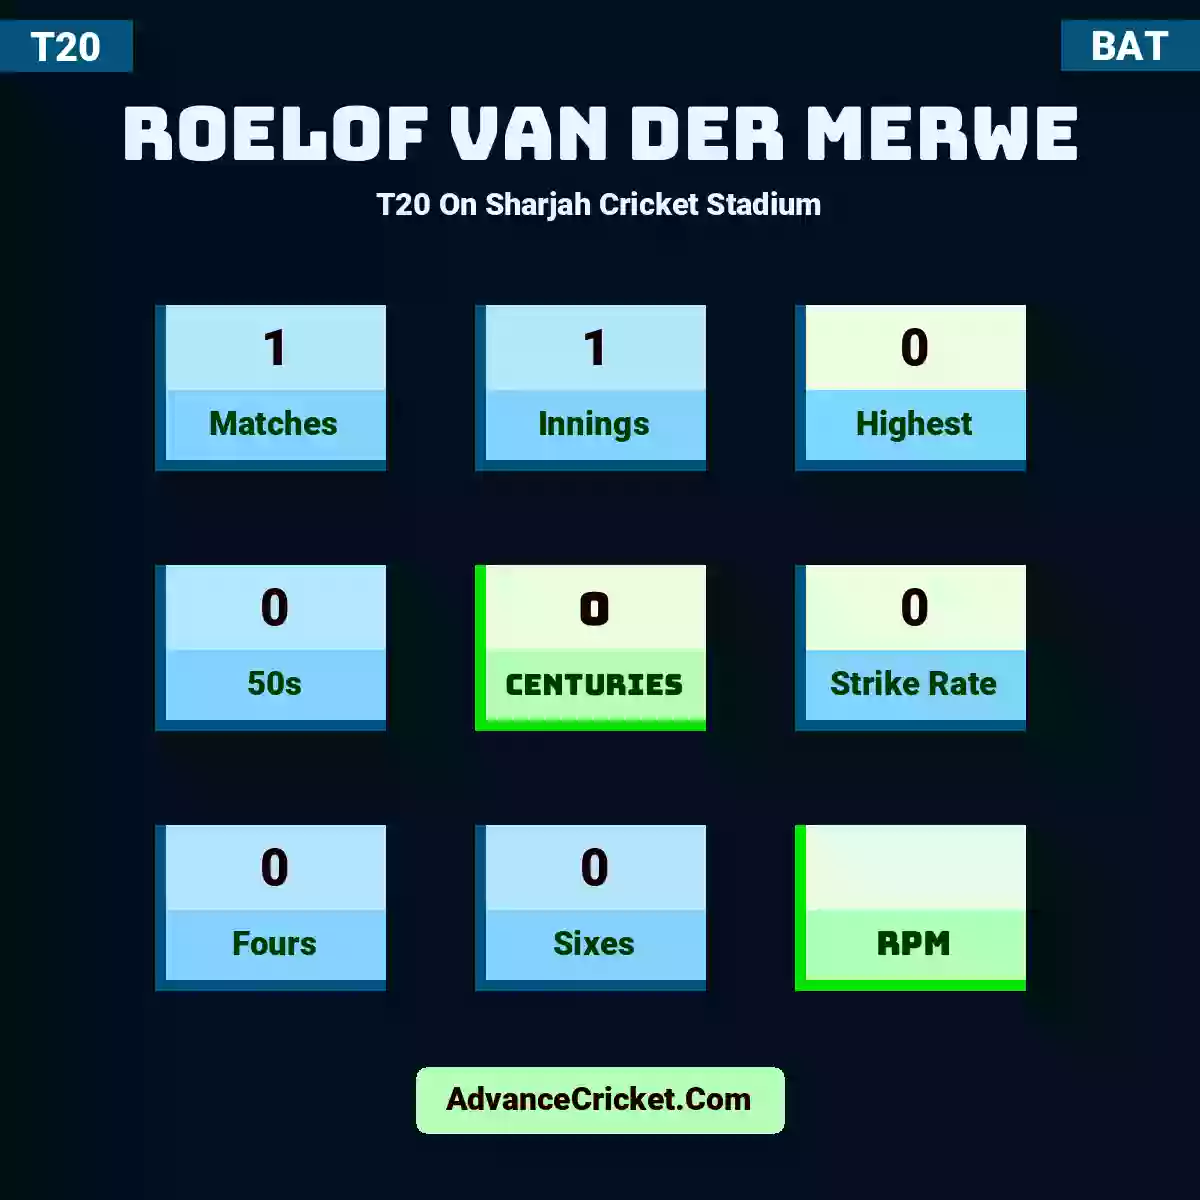 Roelof van der Merwe T20  On Sharjah Cricket Stadium, Roelof van der Merwe played 1 matches, scored 0 runs as highest, 0 half-centuries, and 0 centuries, with a strike rate of 0. R.Merwe hit 0 fours and 0 sixes.